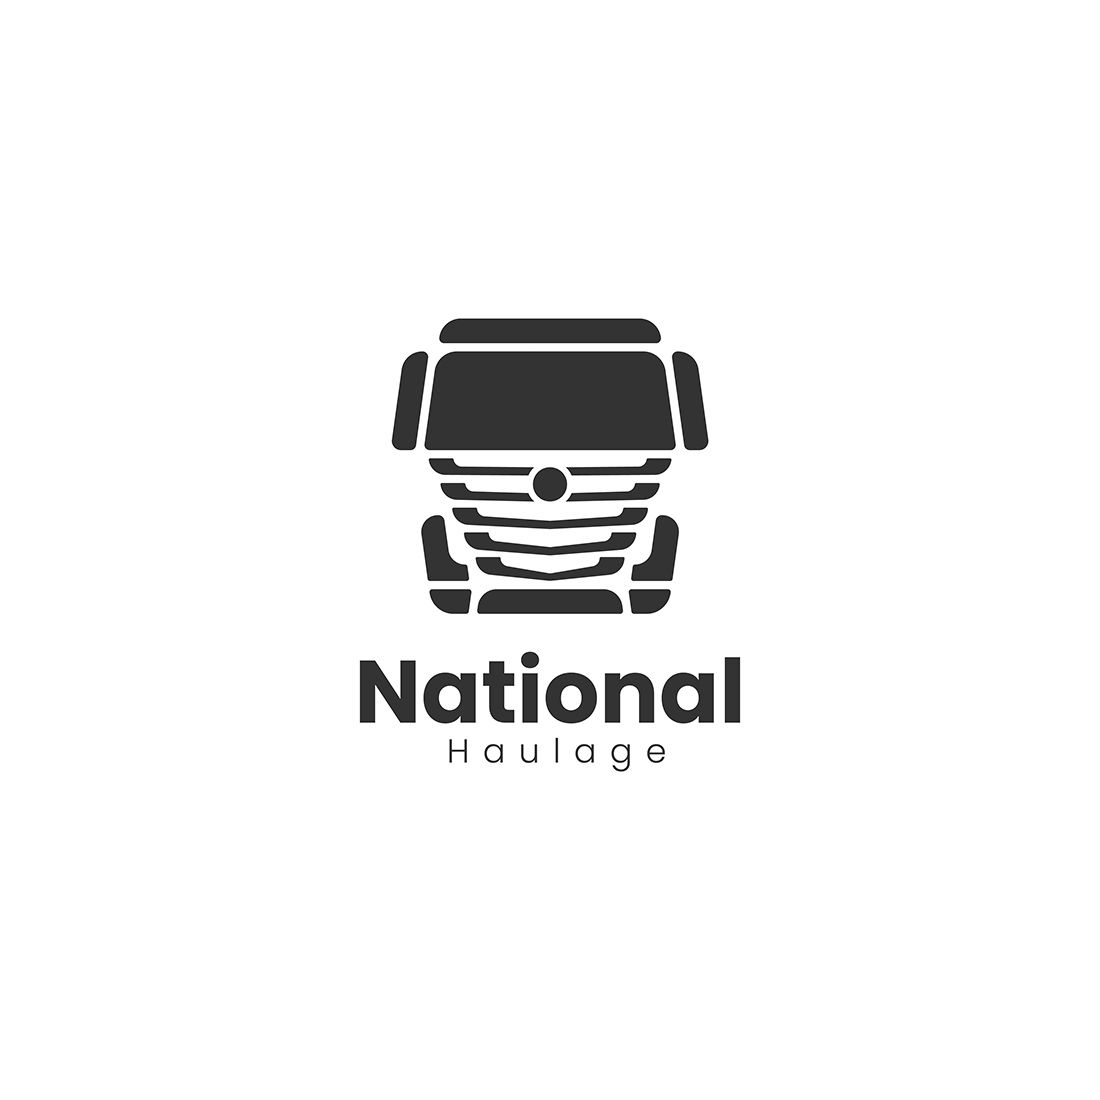 National Haulage Logo gray version.